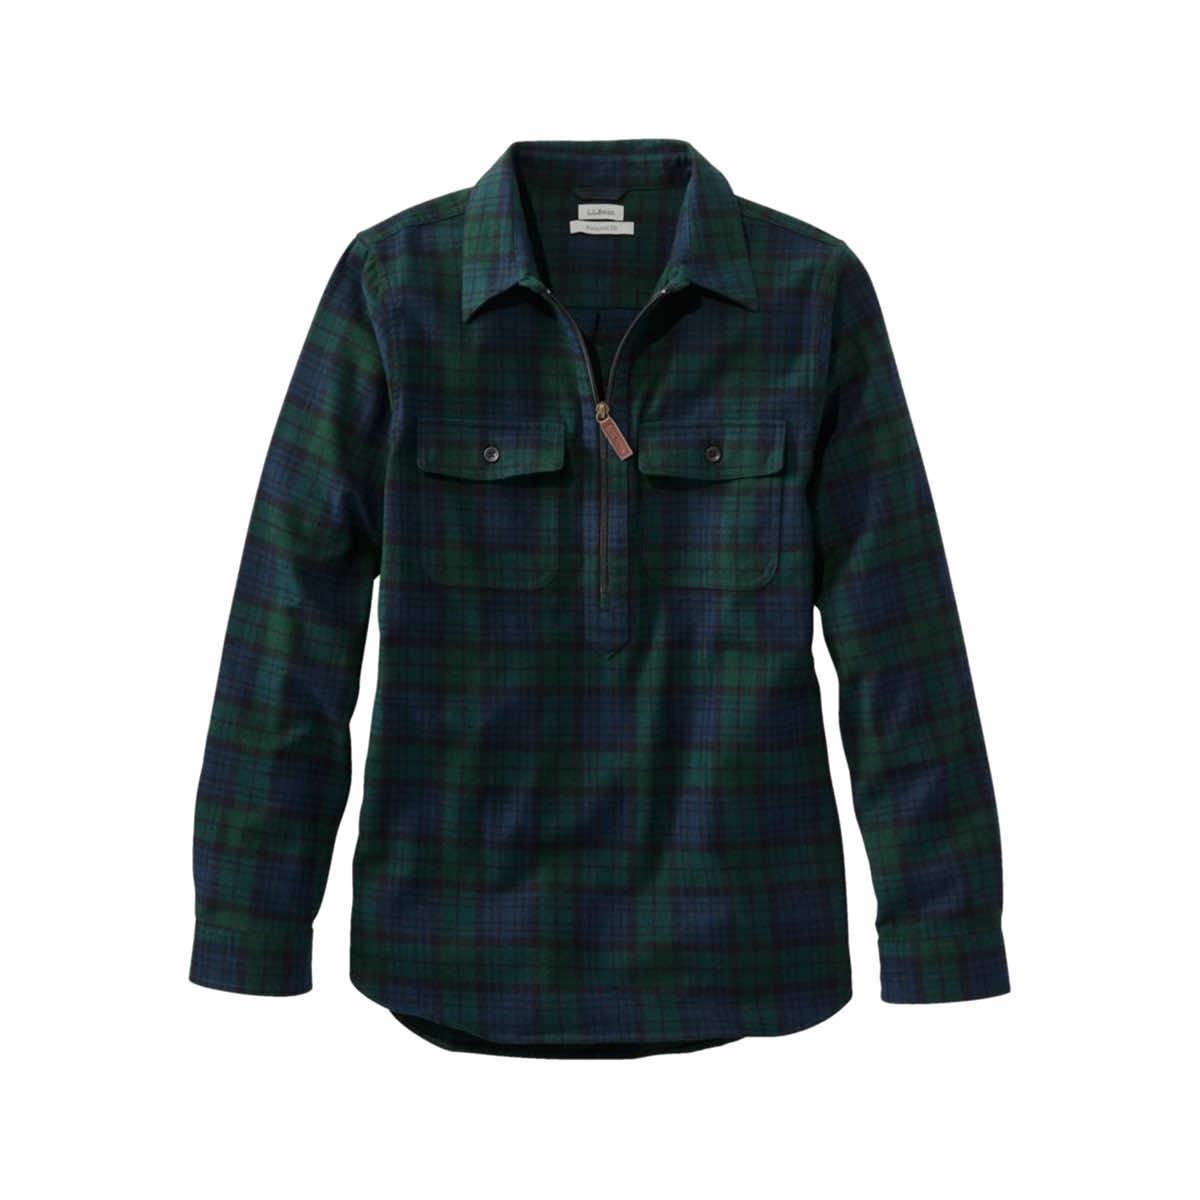 Women's Scotch Plaid Flannel Shirt, Tunic at L.L. Bean